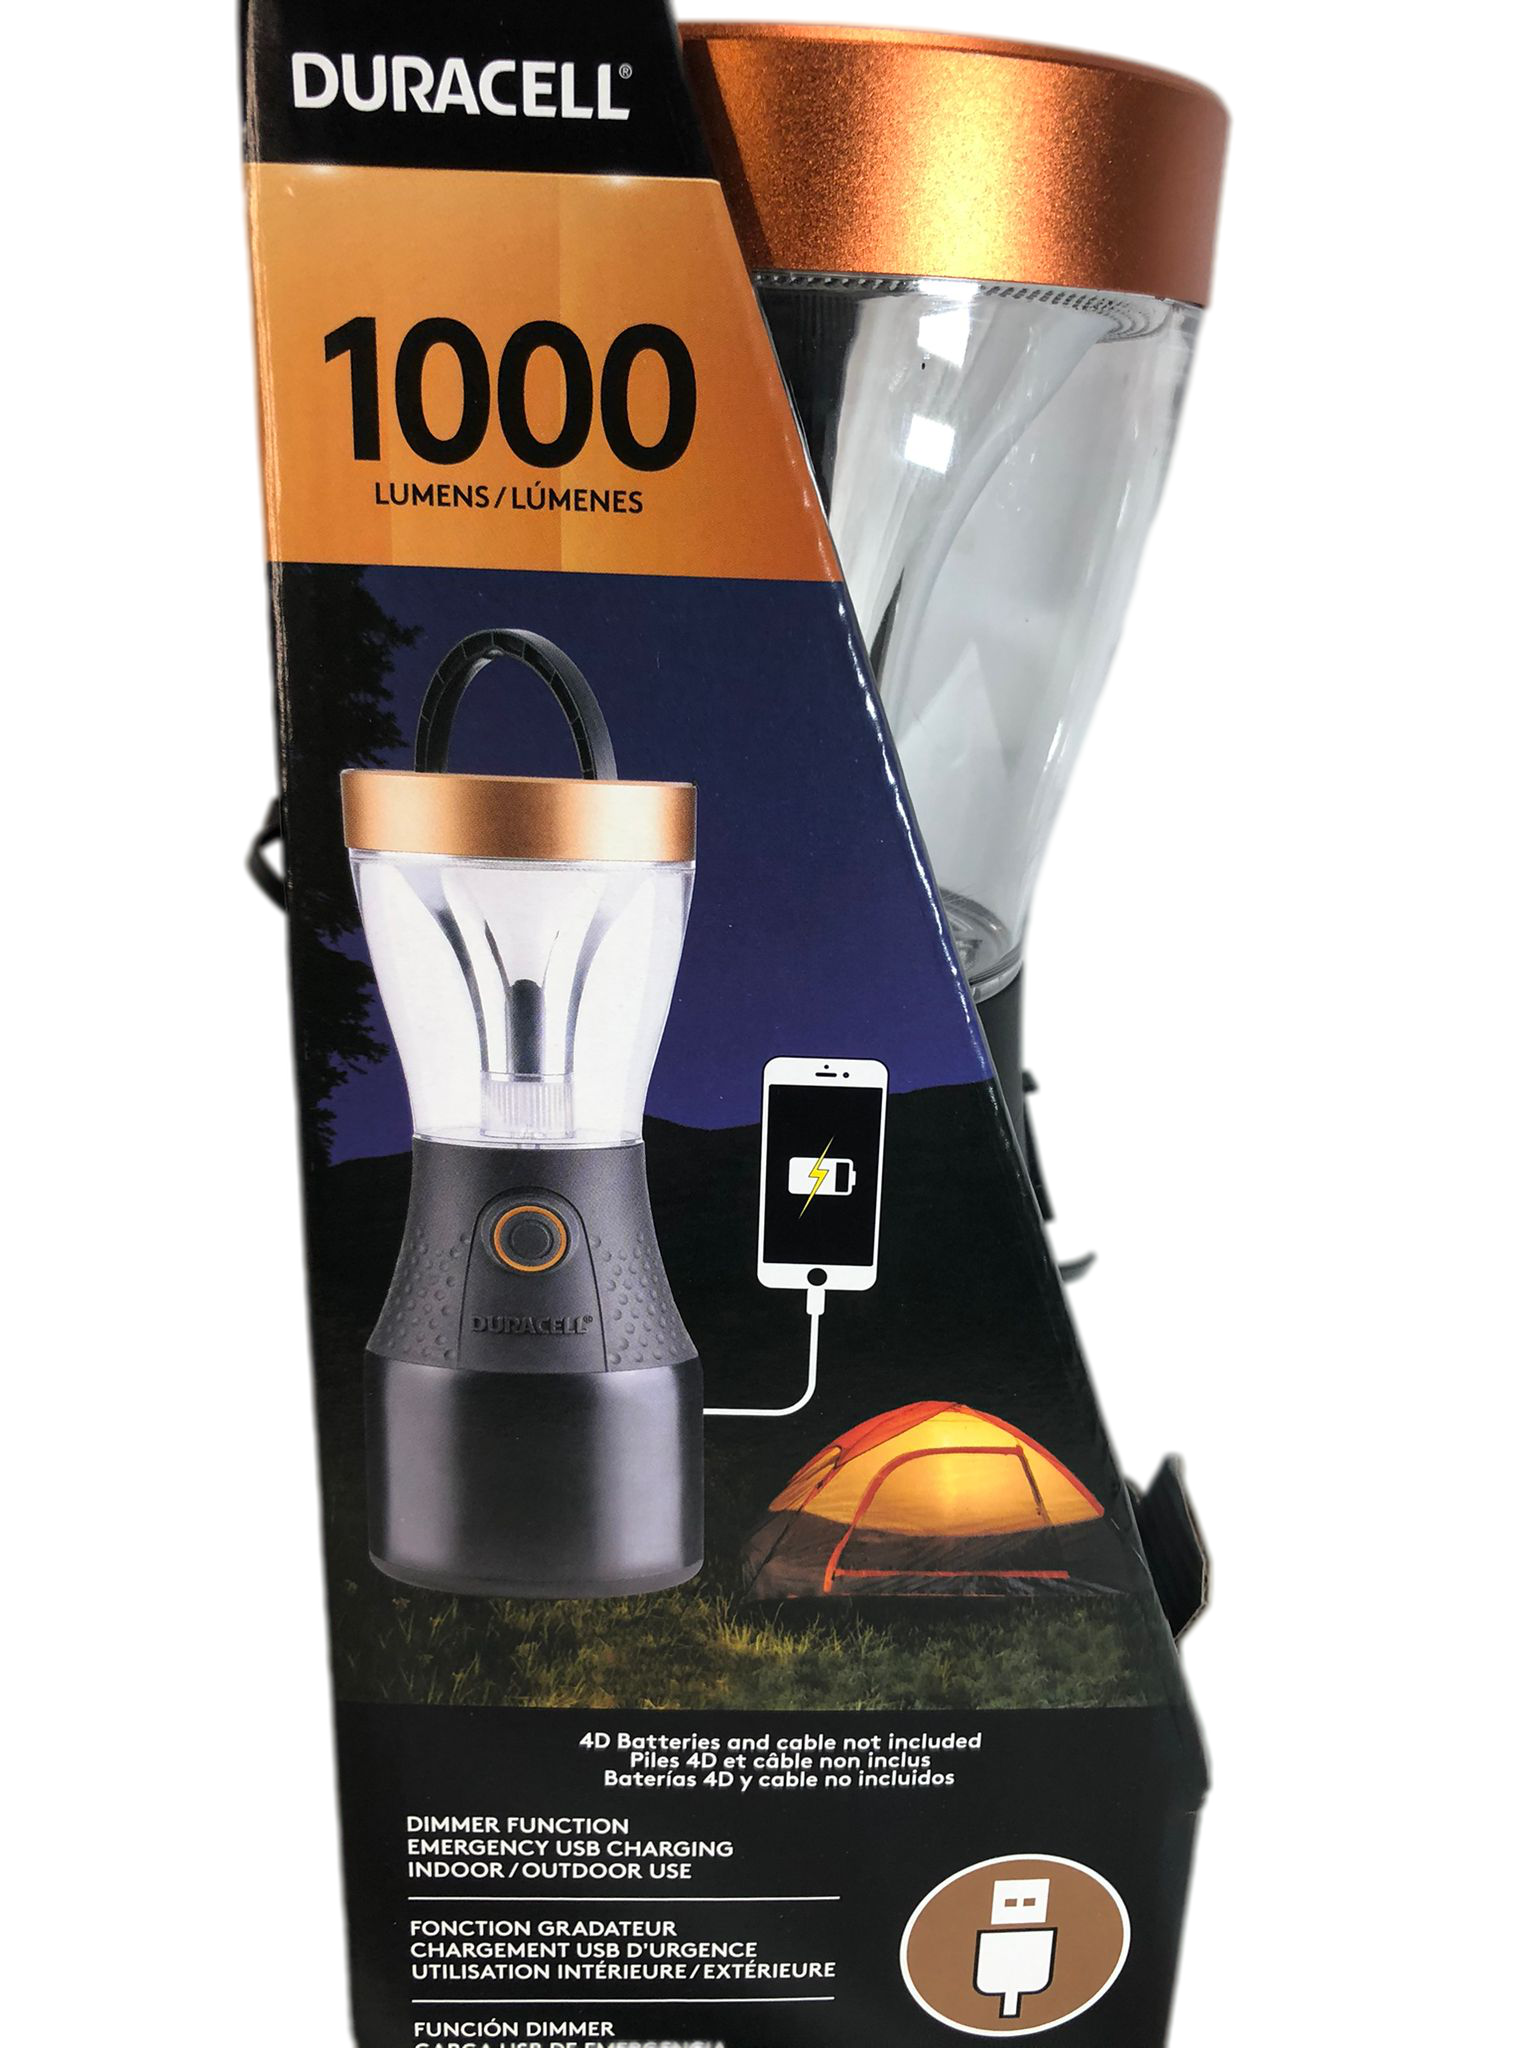 Duracell 1000 Lumen Lantern 2 pack – Wholesale Bidder